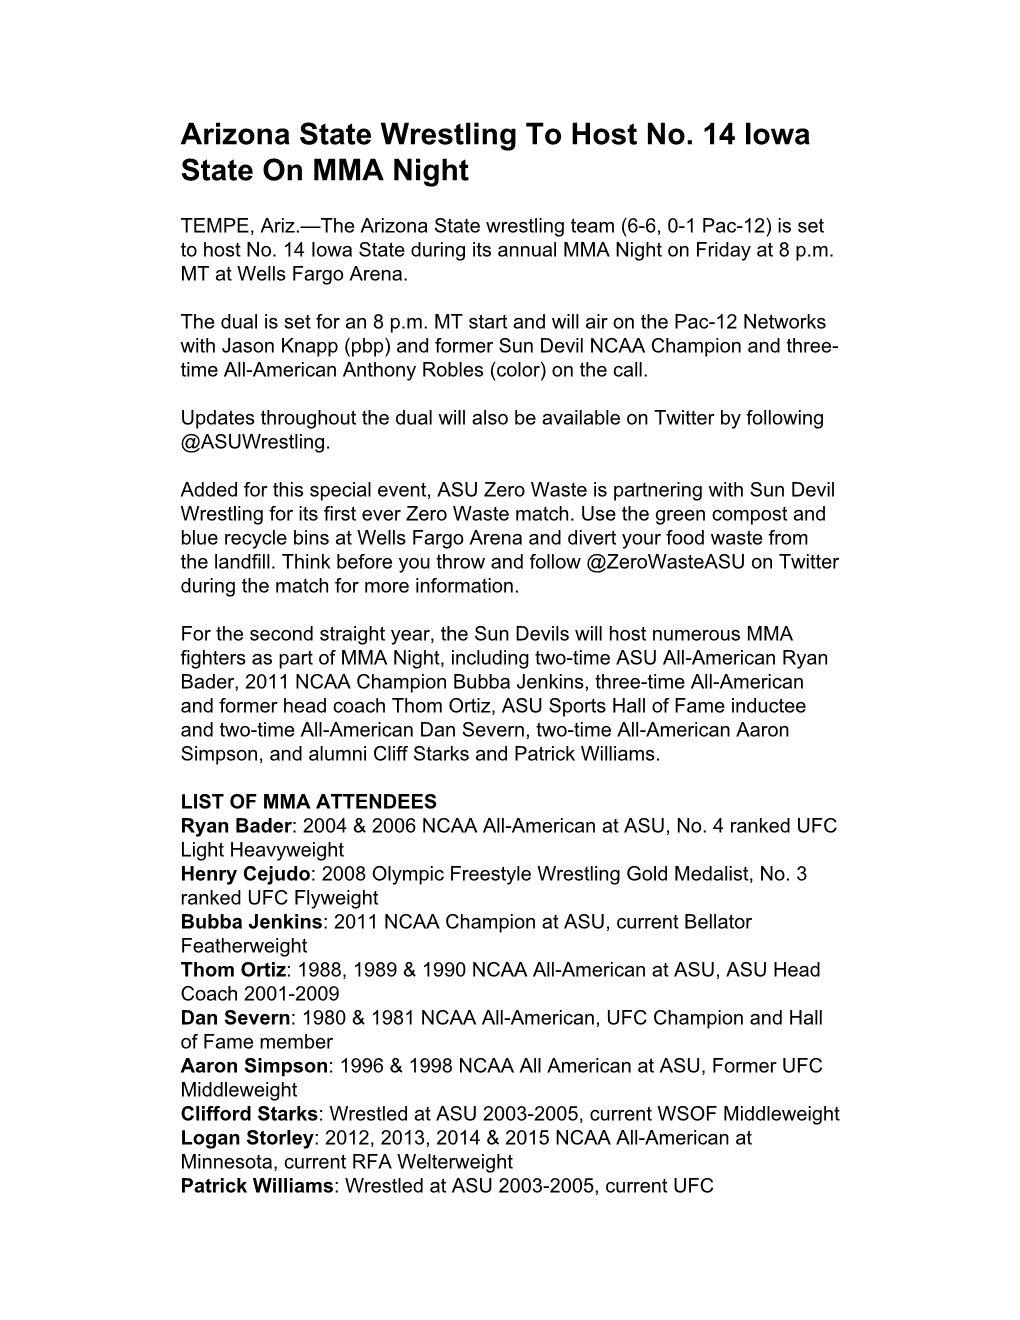 Arizona State Wrestling to Host No. 14 Iowa State on MMA Night